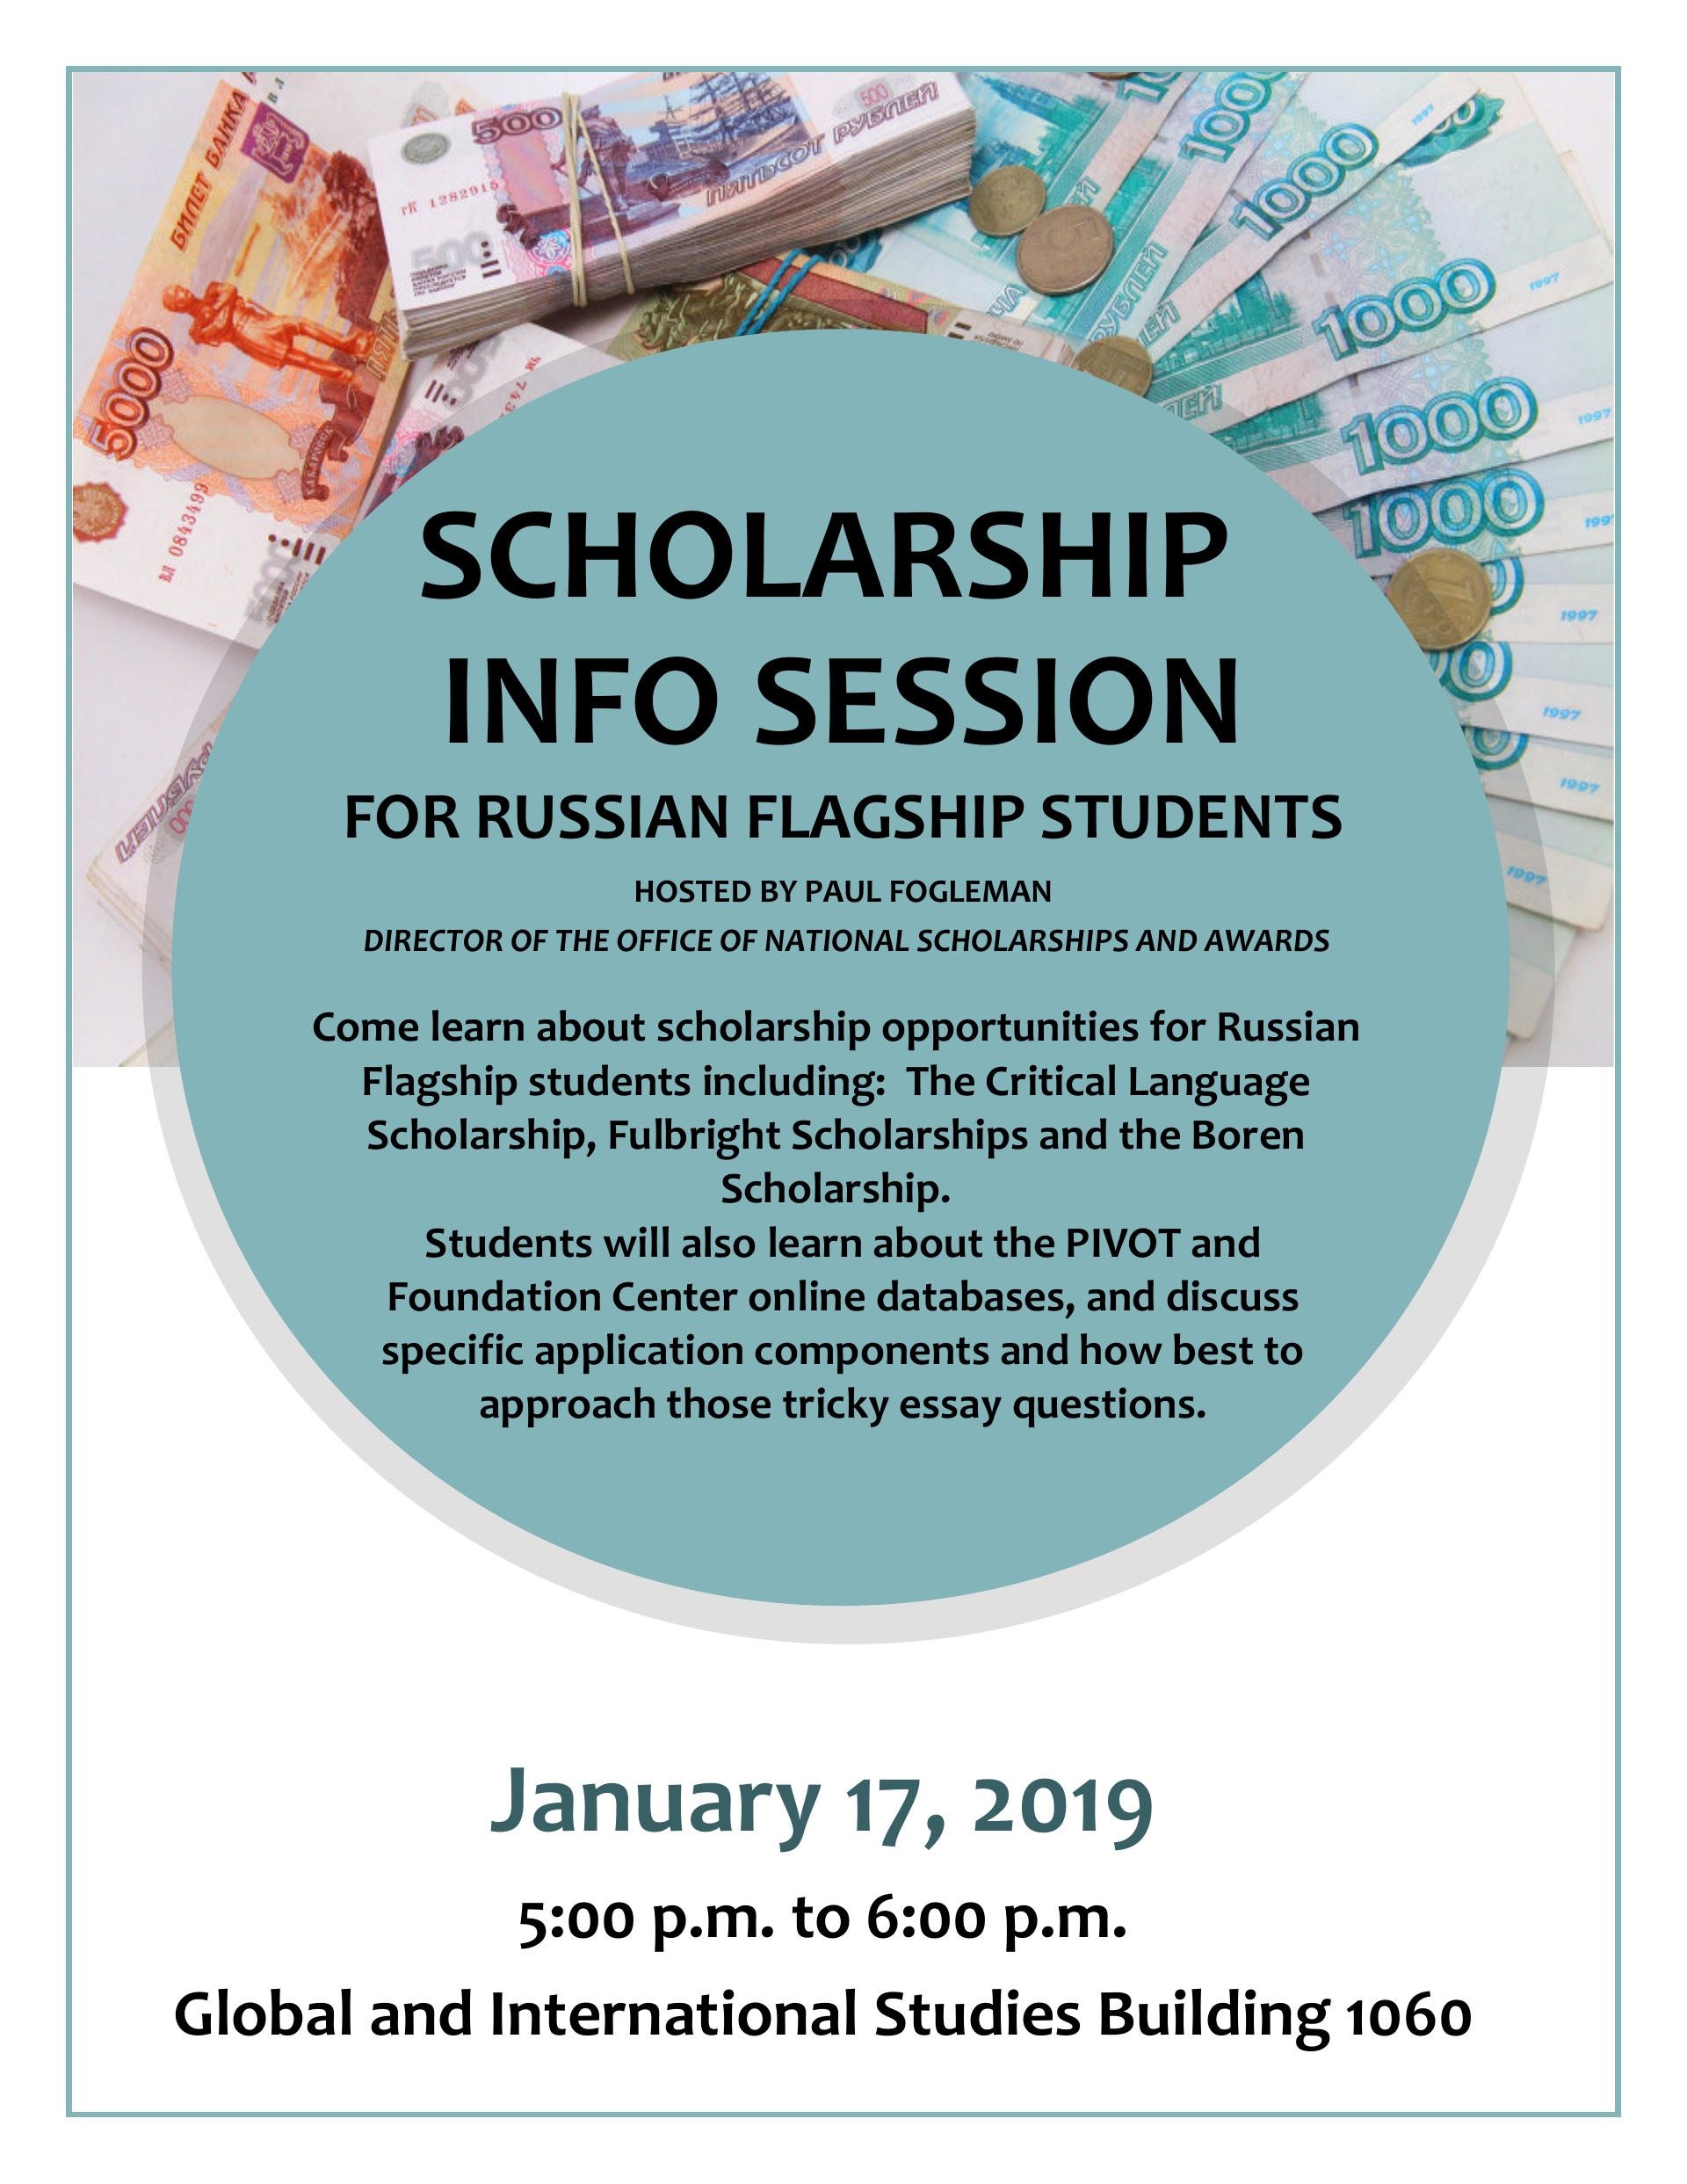 Flyer for scholarship information session